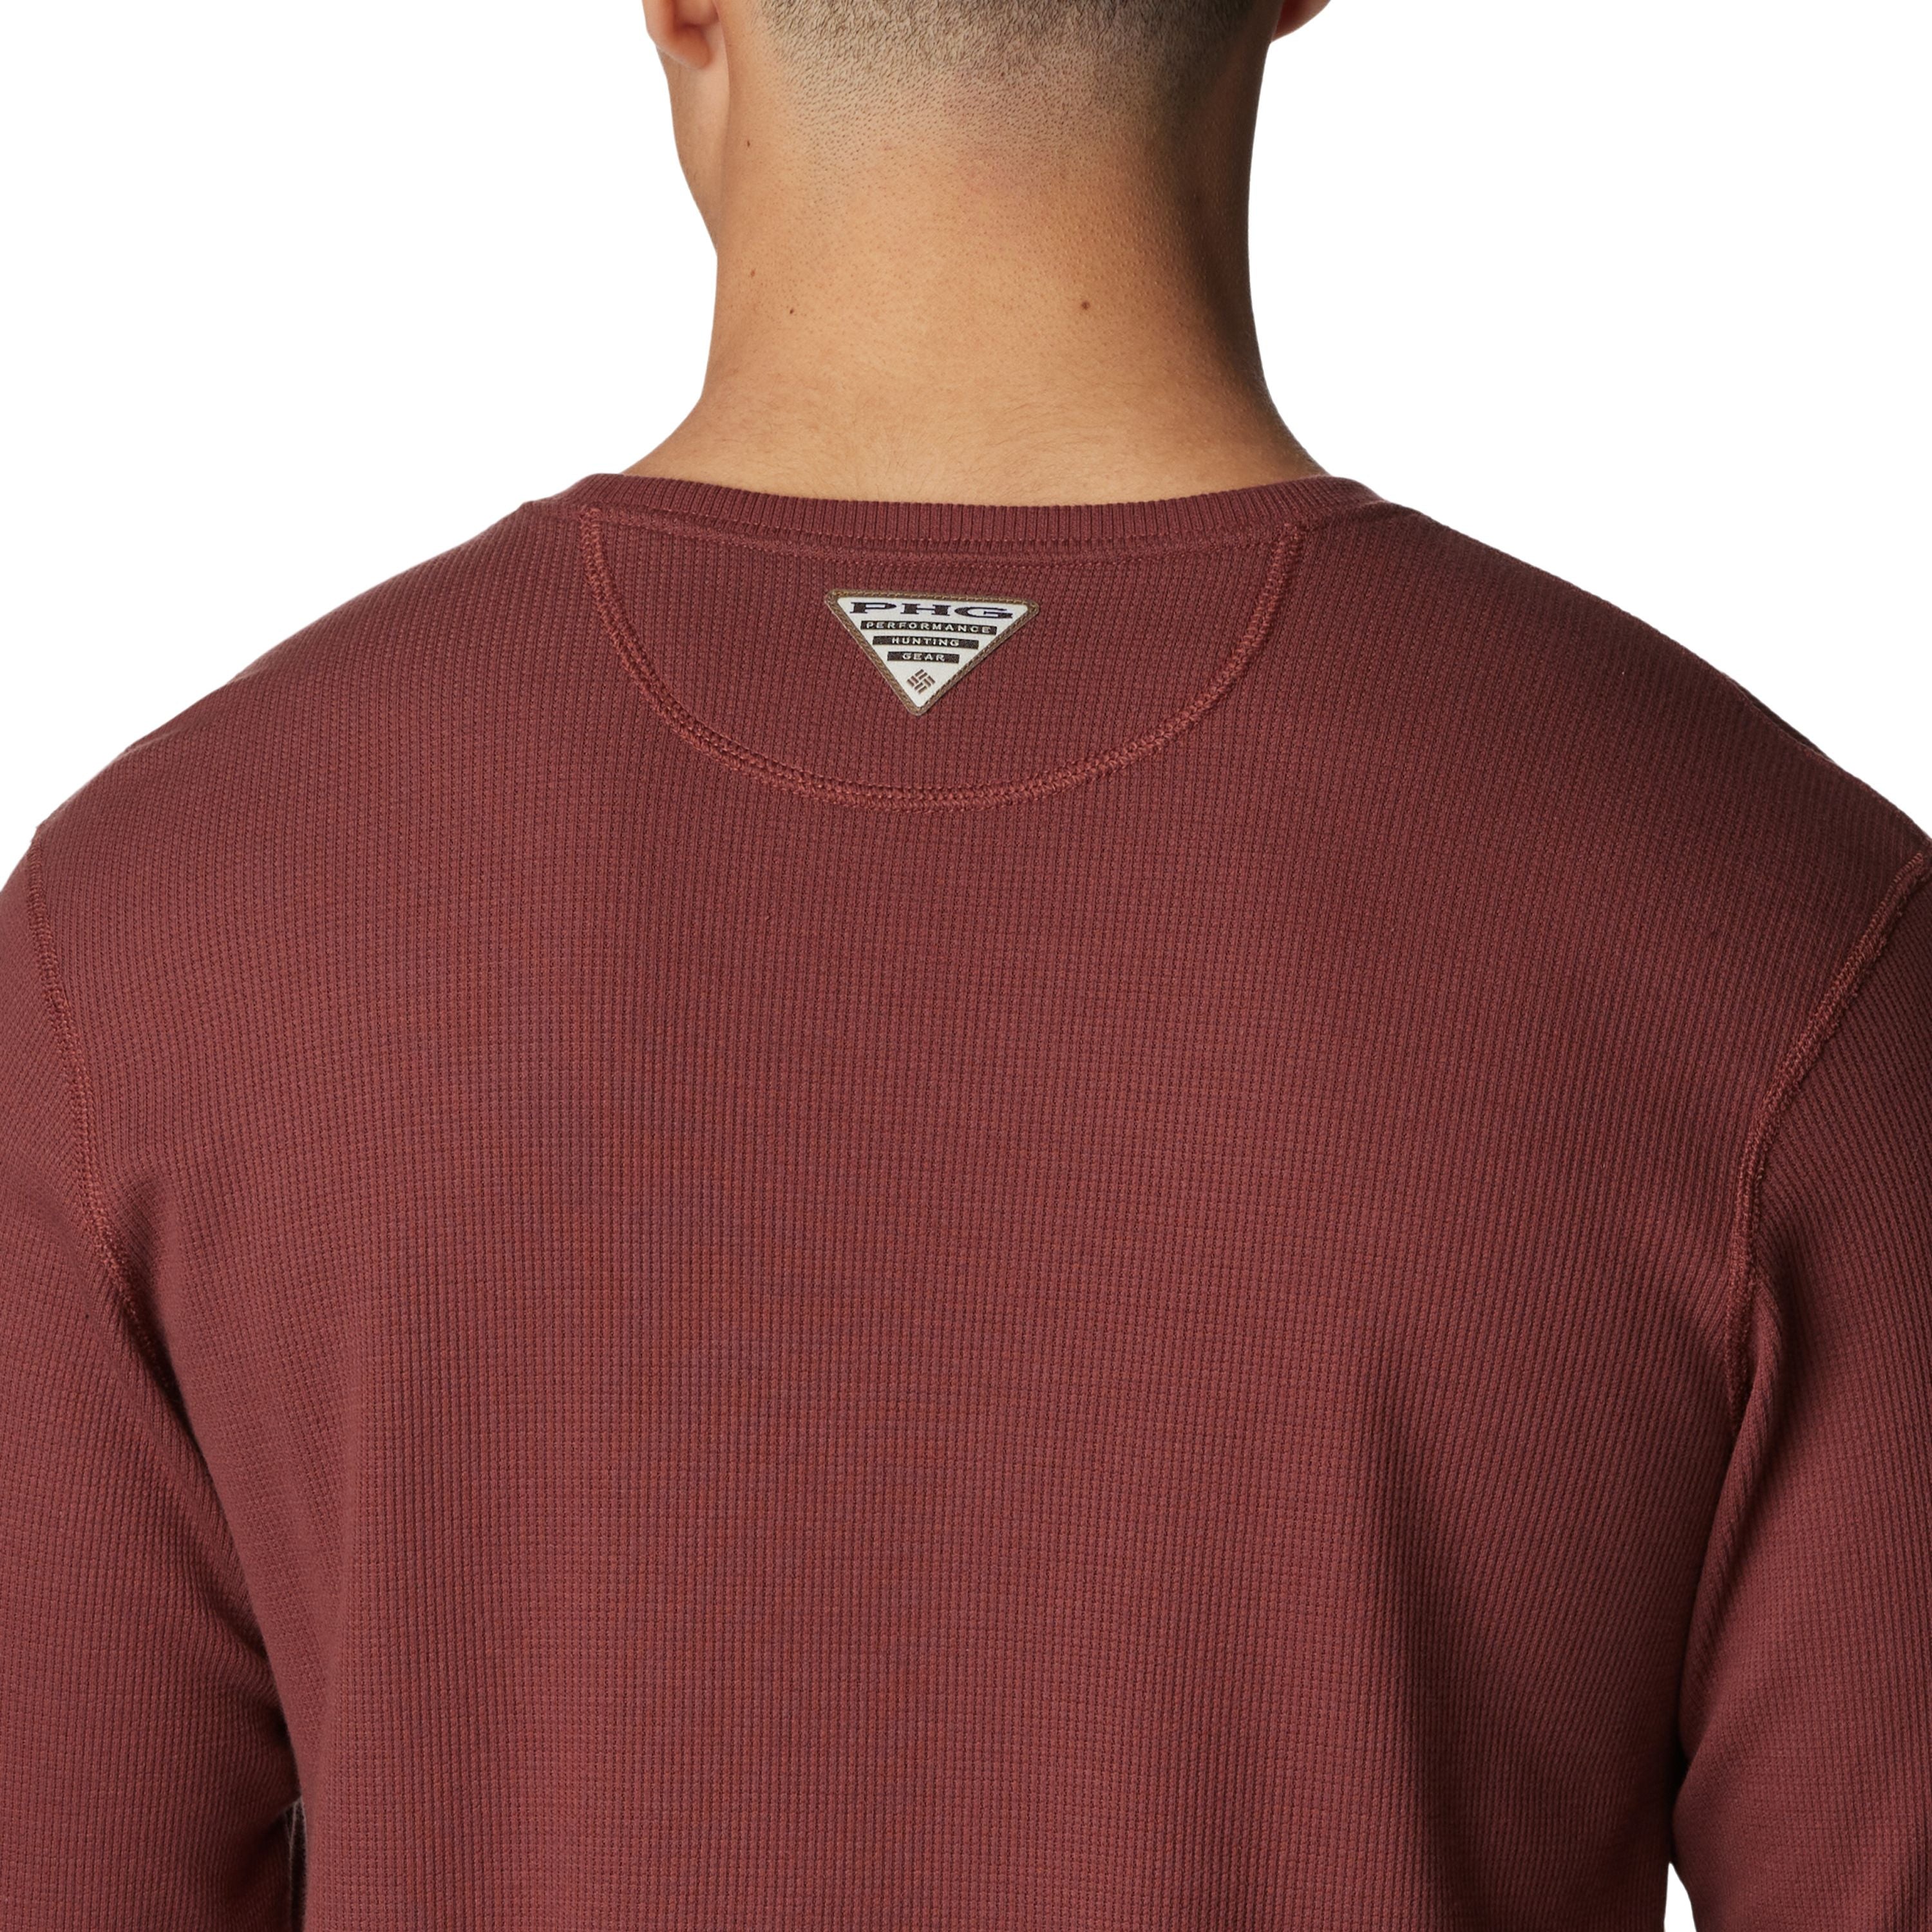 Chandail manches longues "PHG™ Built For It" - Homme||"PHG™ Built For It" Long sleeves shirt - Men's